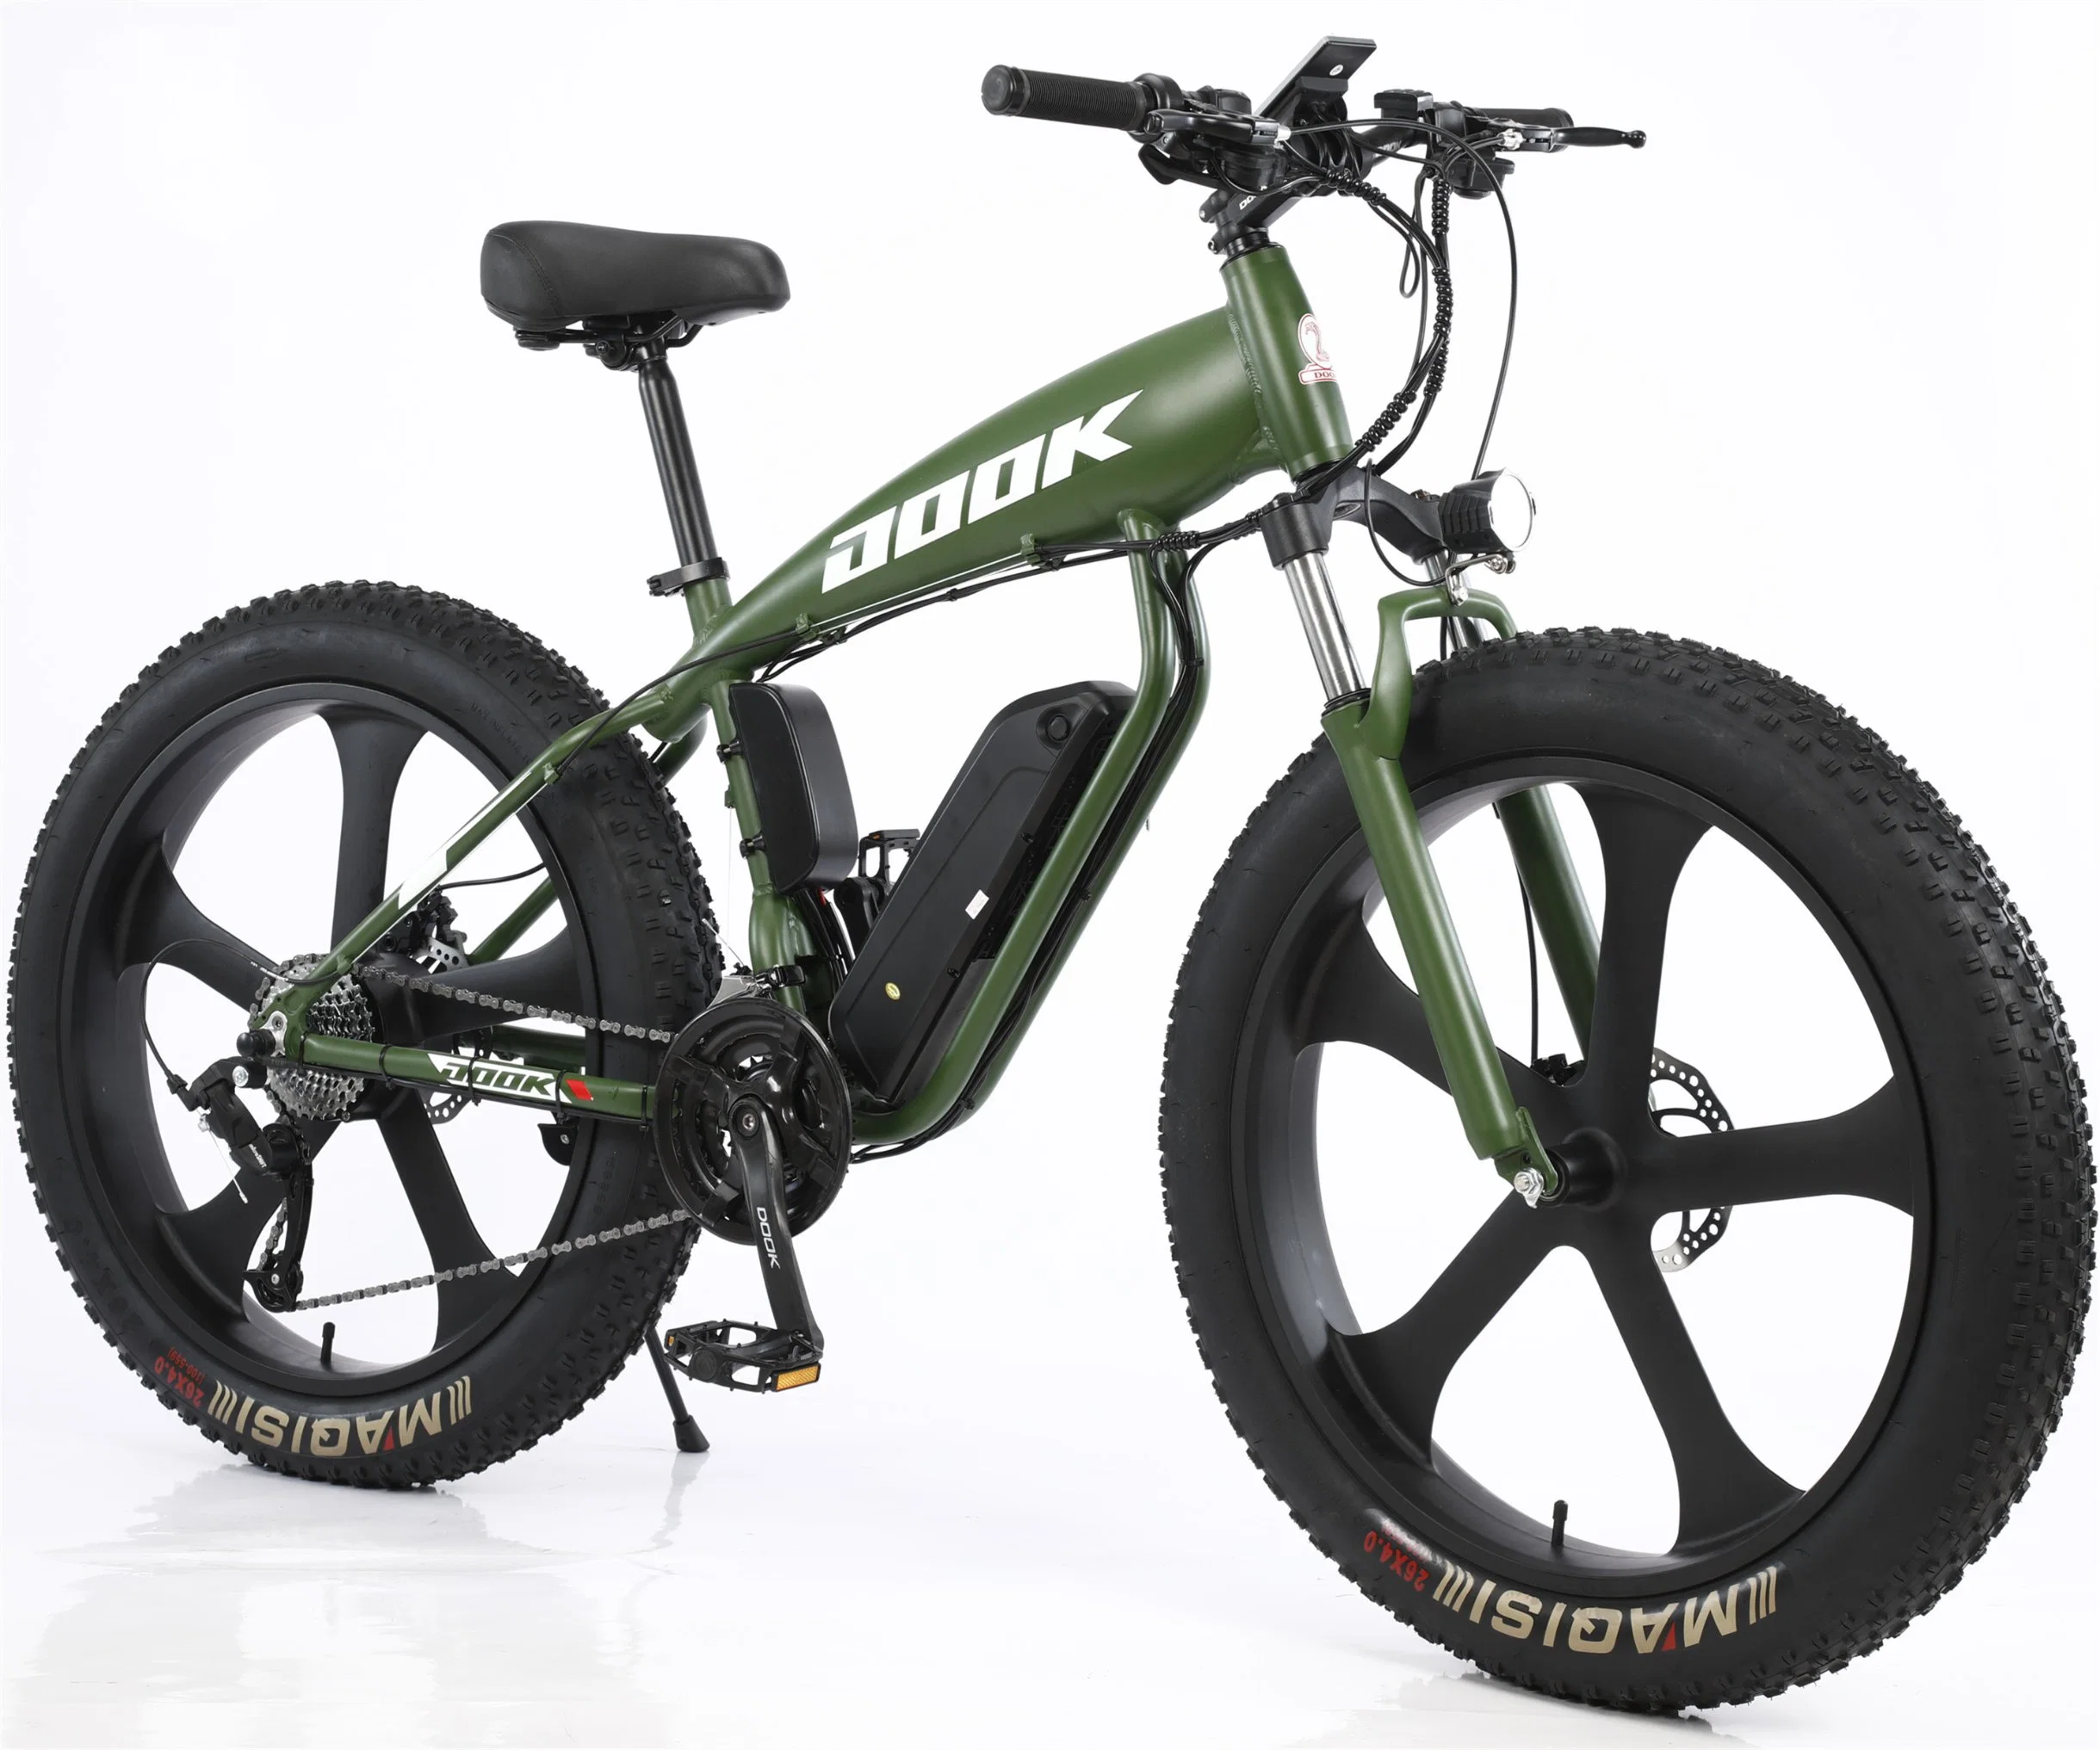 E Bike Chine E Bike Lithium E Bike Mountain Bike Vélo Snow Bike 500W 48V13ah batterie cycle 26*4.0 graisse pneu